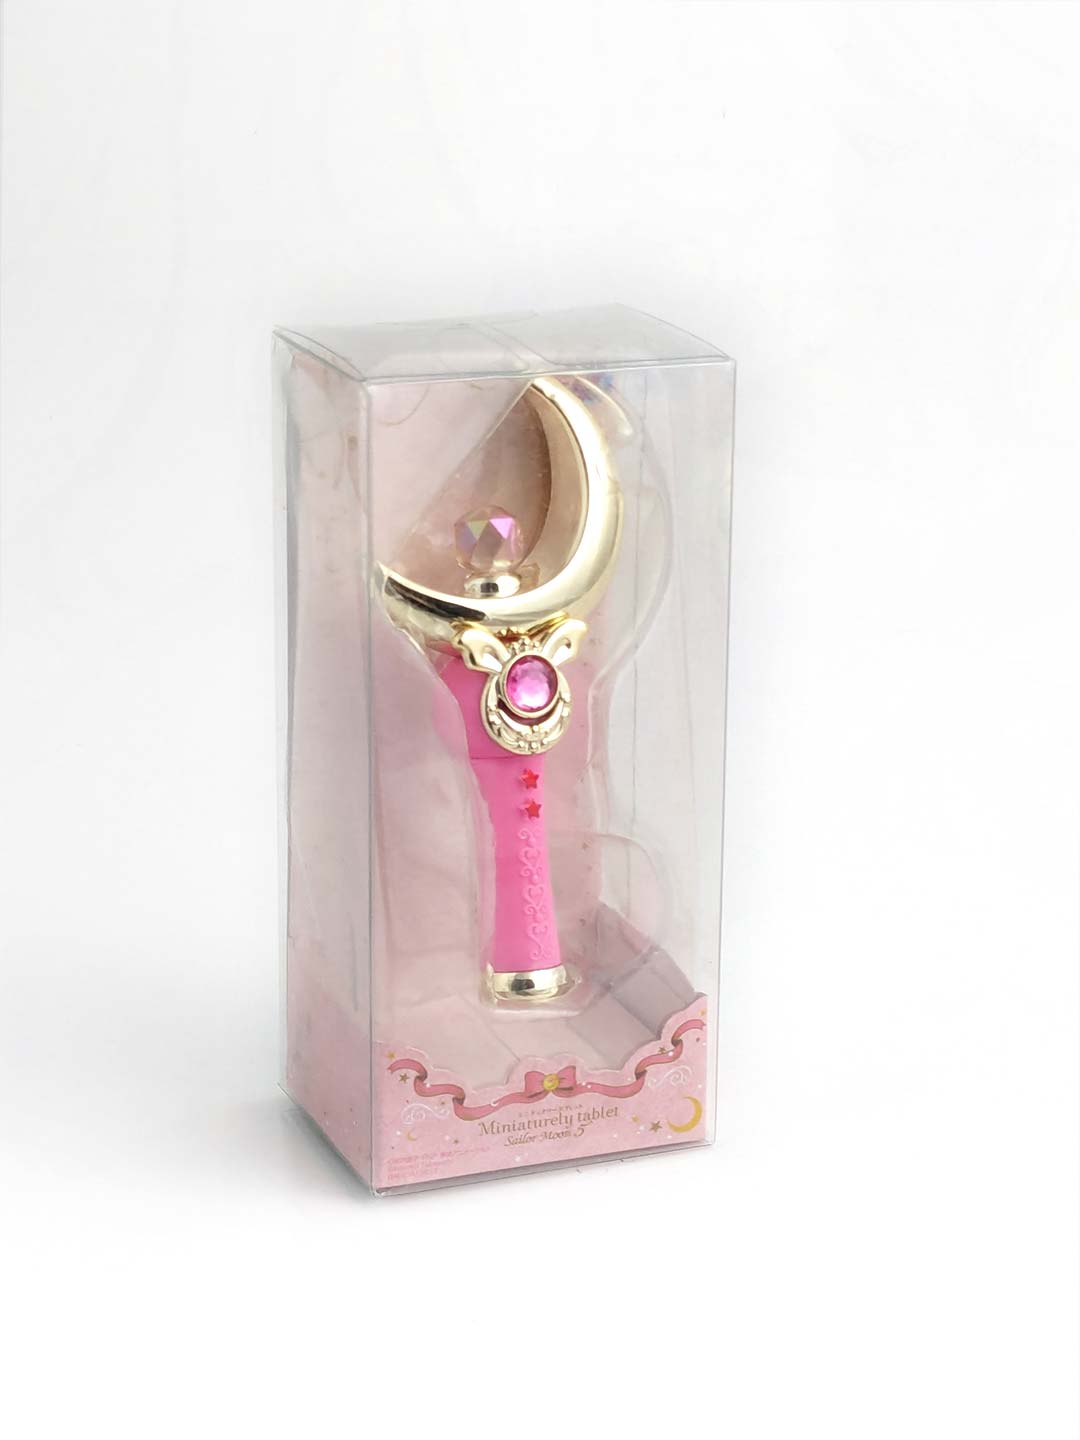 Sailor Moon - Miniaturely Tablet Vol.5